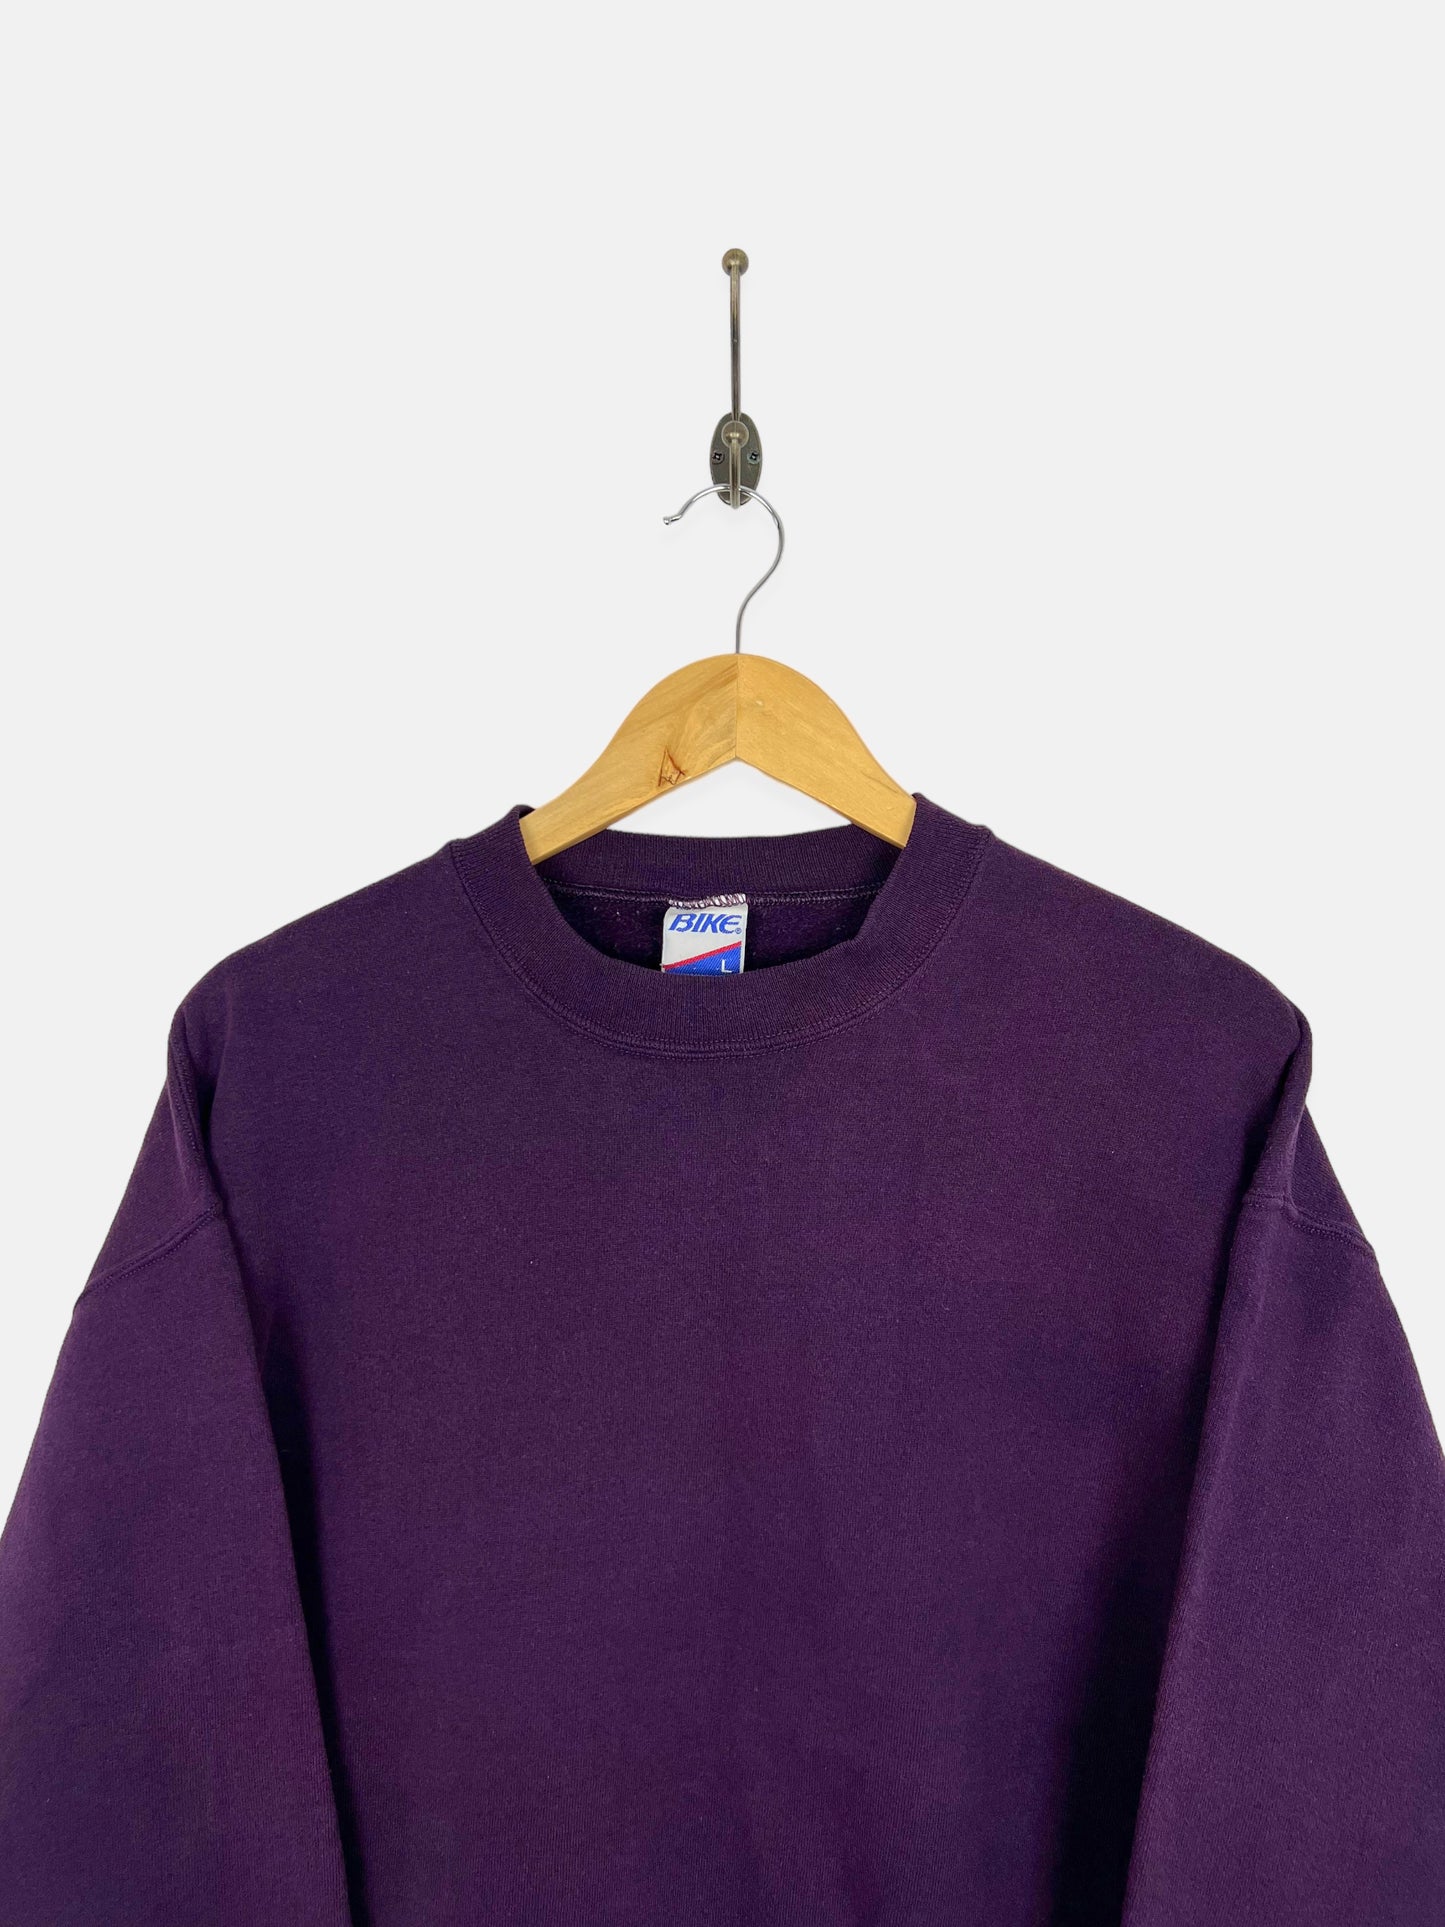 90's Purple USA Made Vintage Sweatshirt Size M